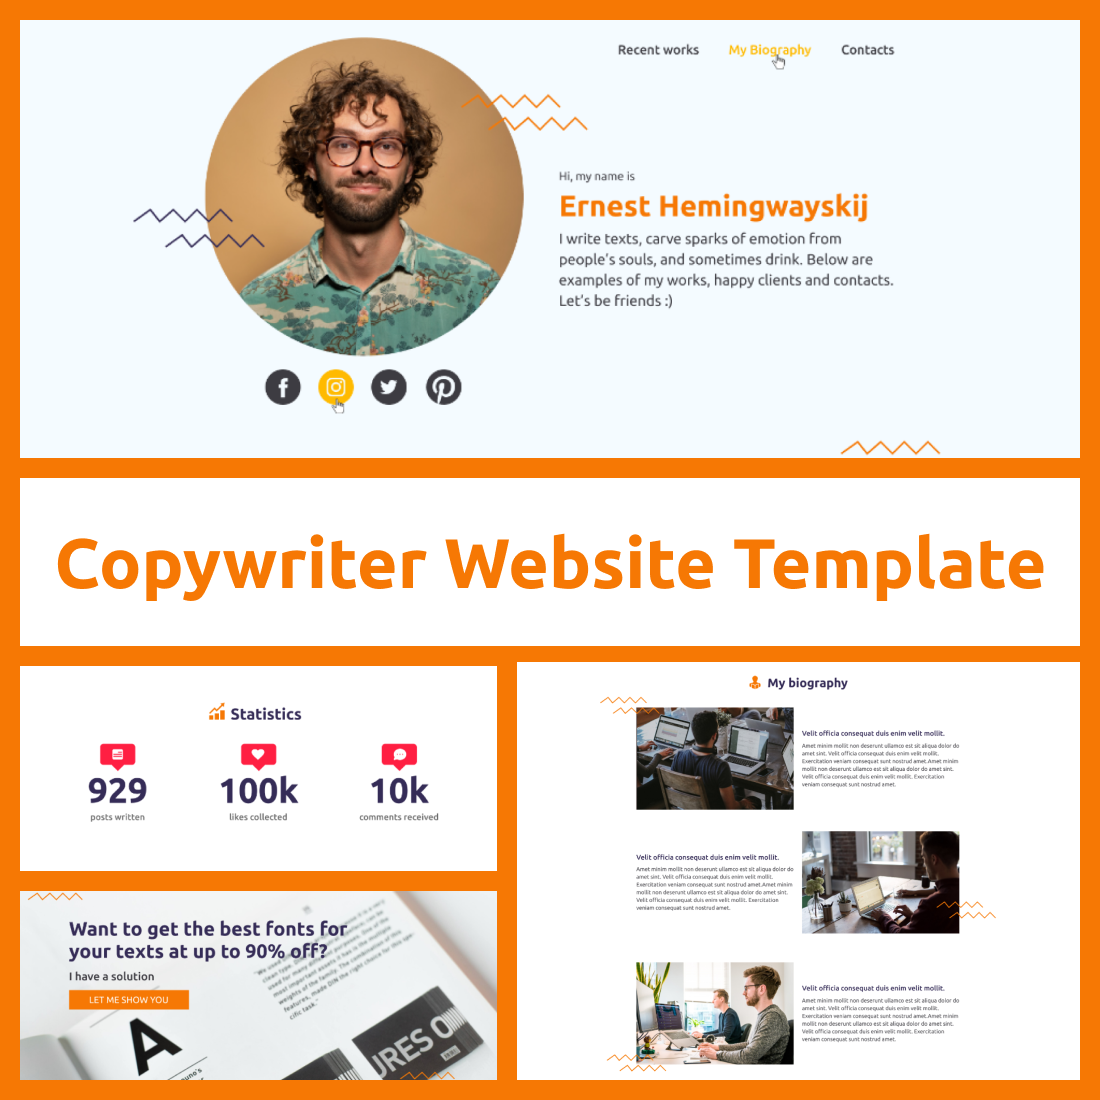 Copywriter Website Template Blogspot cover.